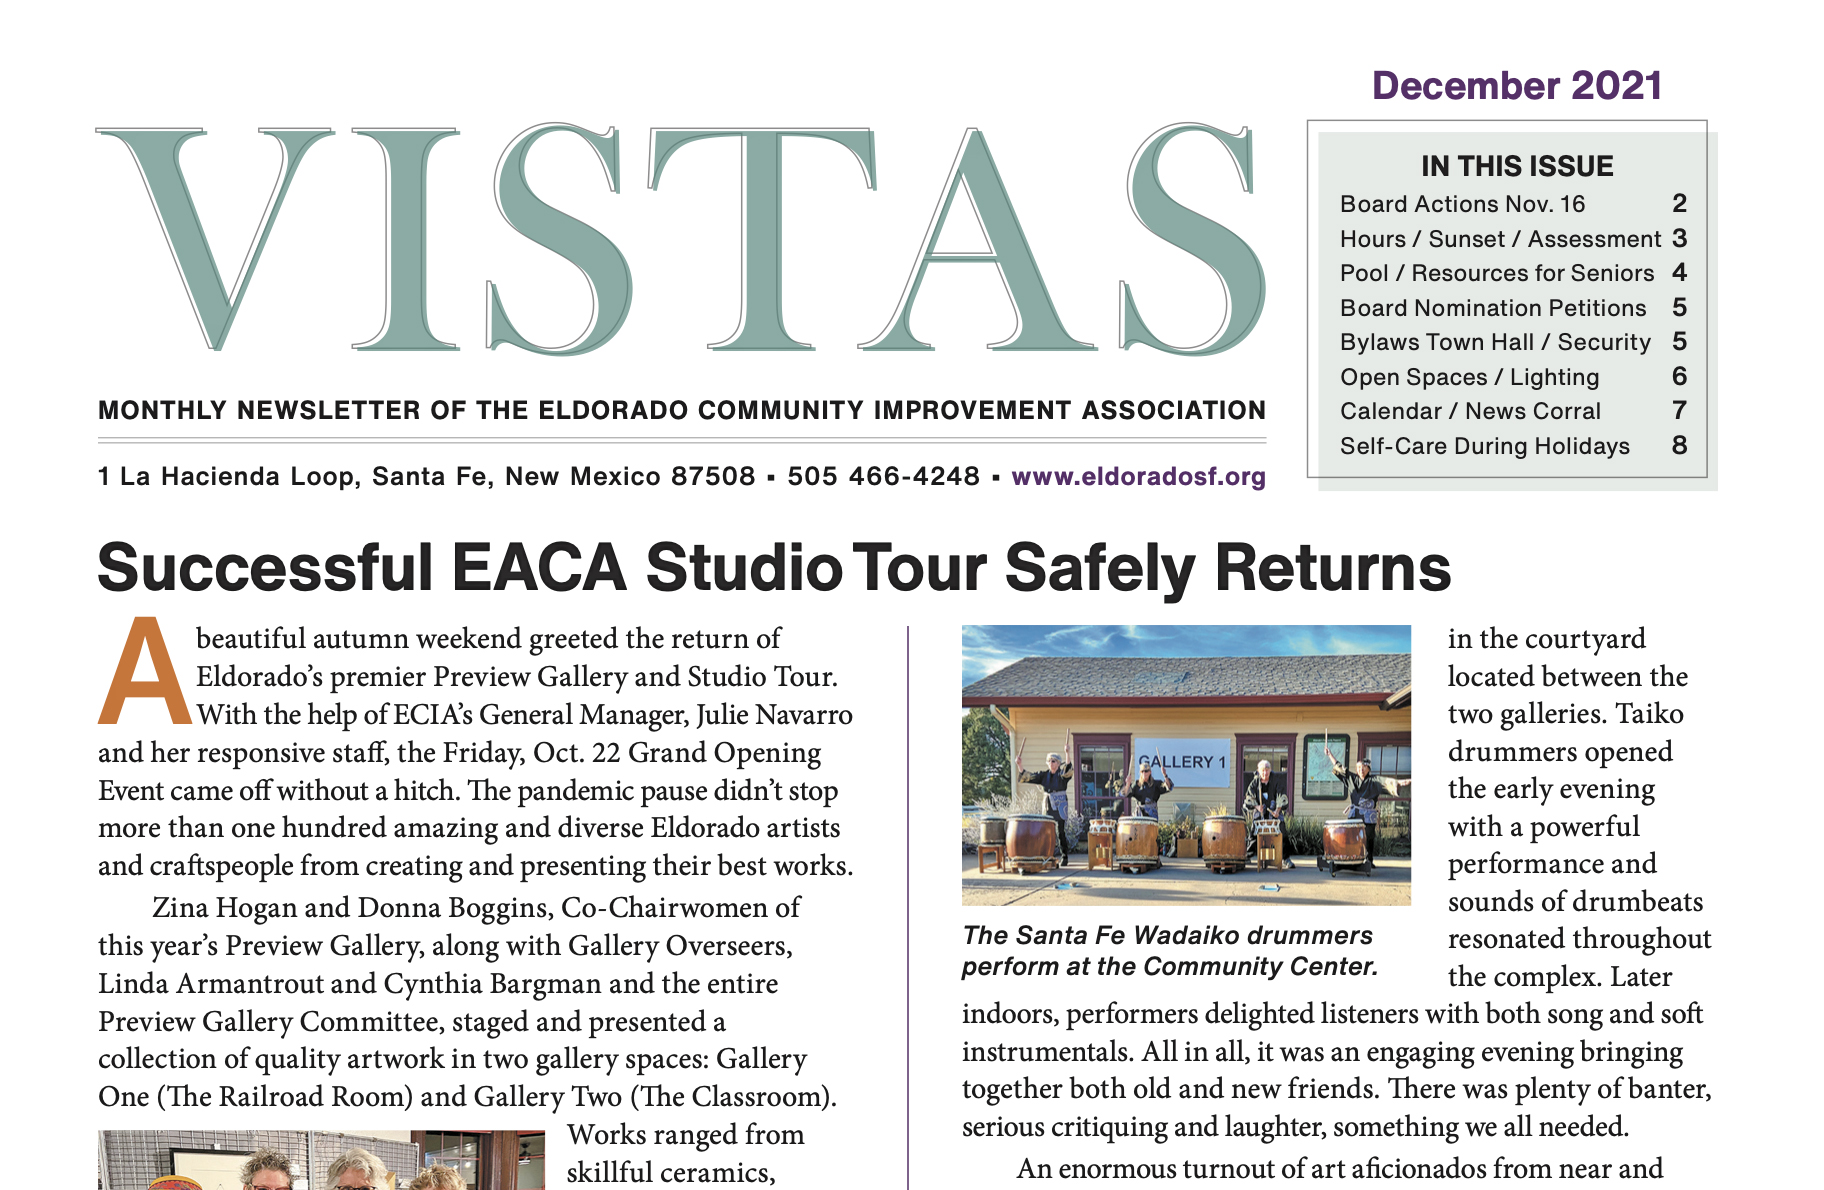 December Vistas Community Newsletter Now Available